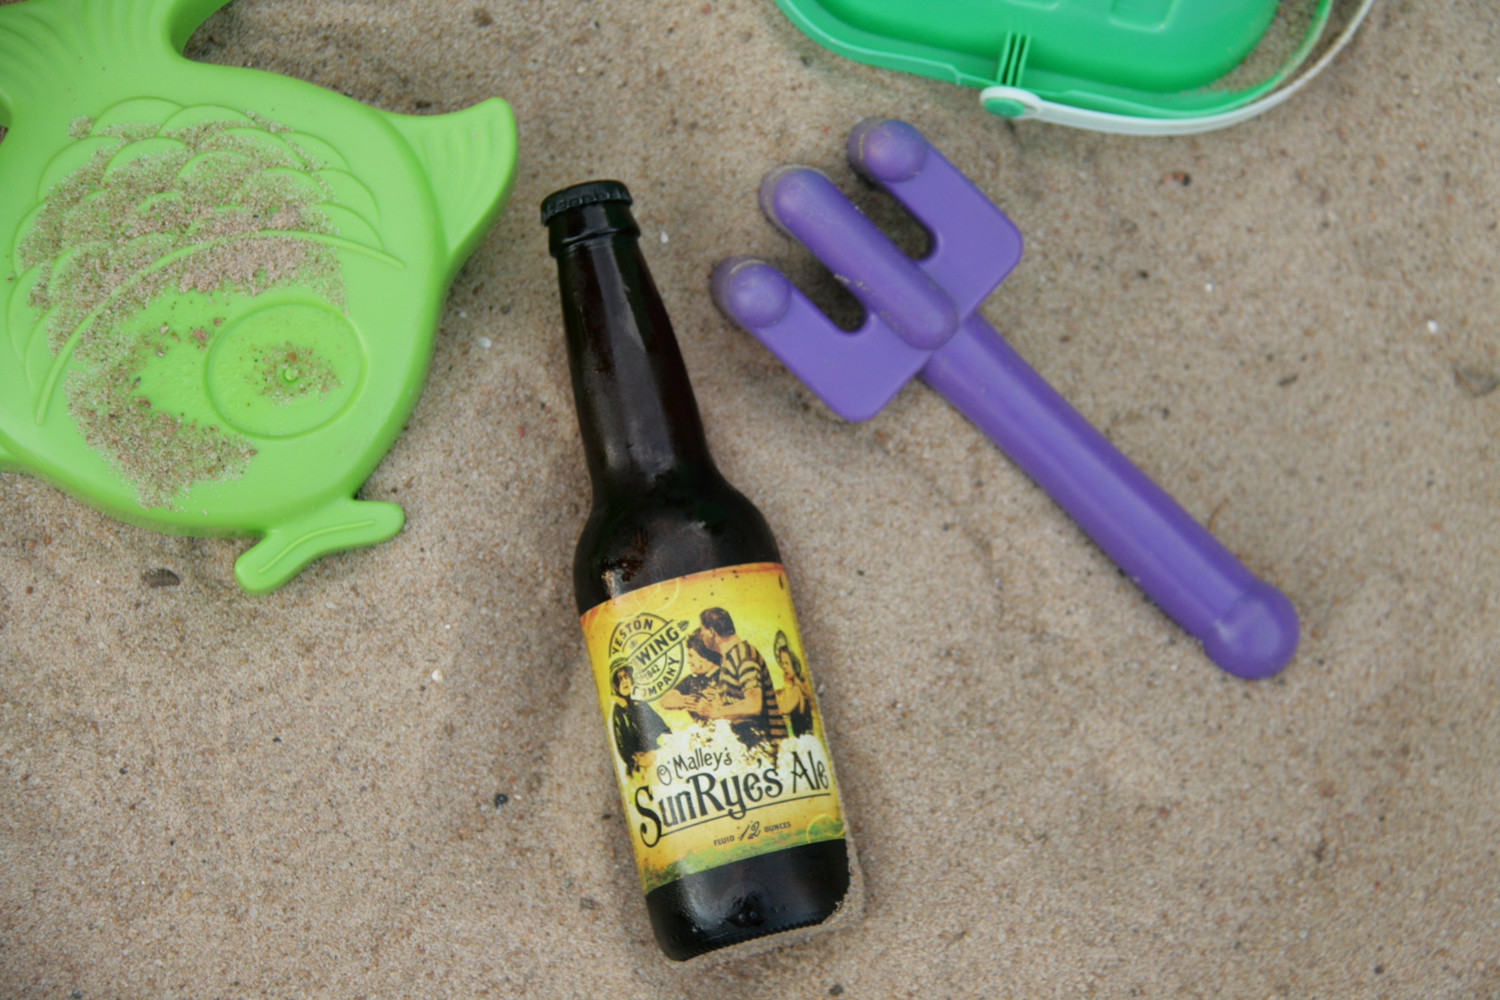 Enjoy Weston SunRyes summer rye beer on the beach.